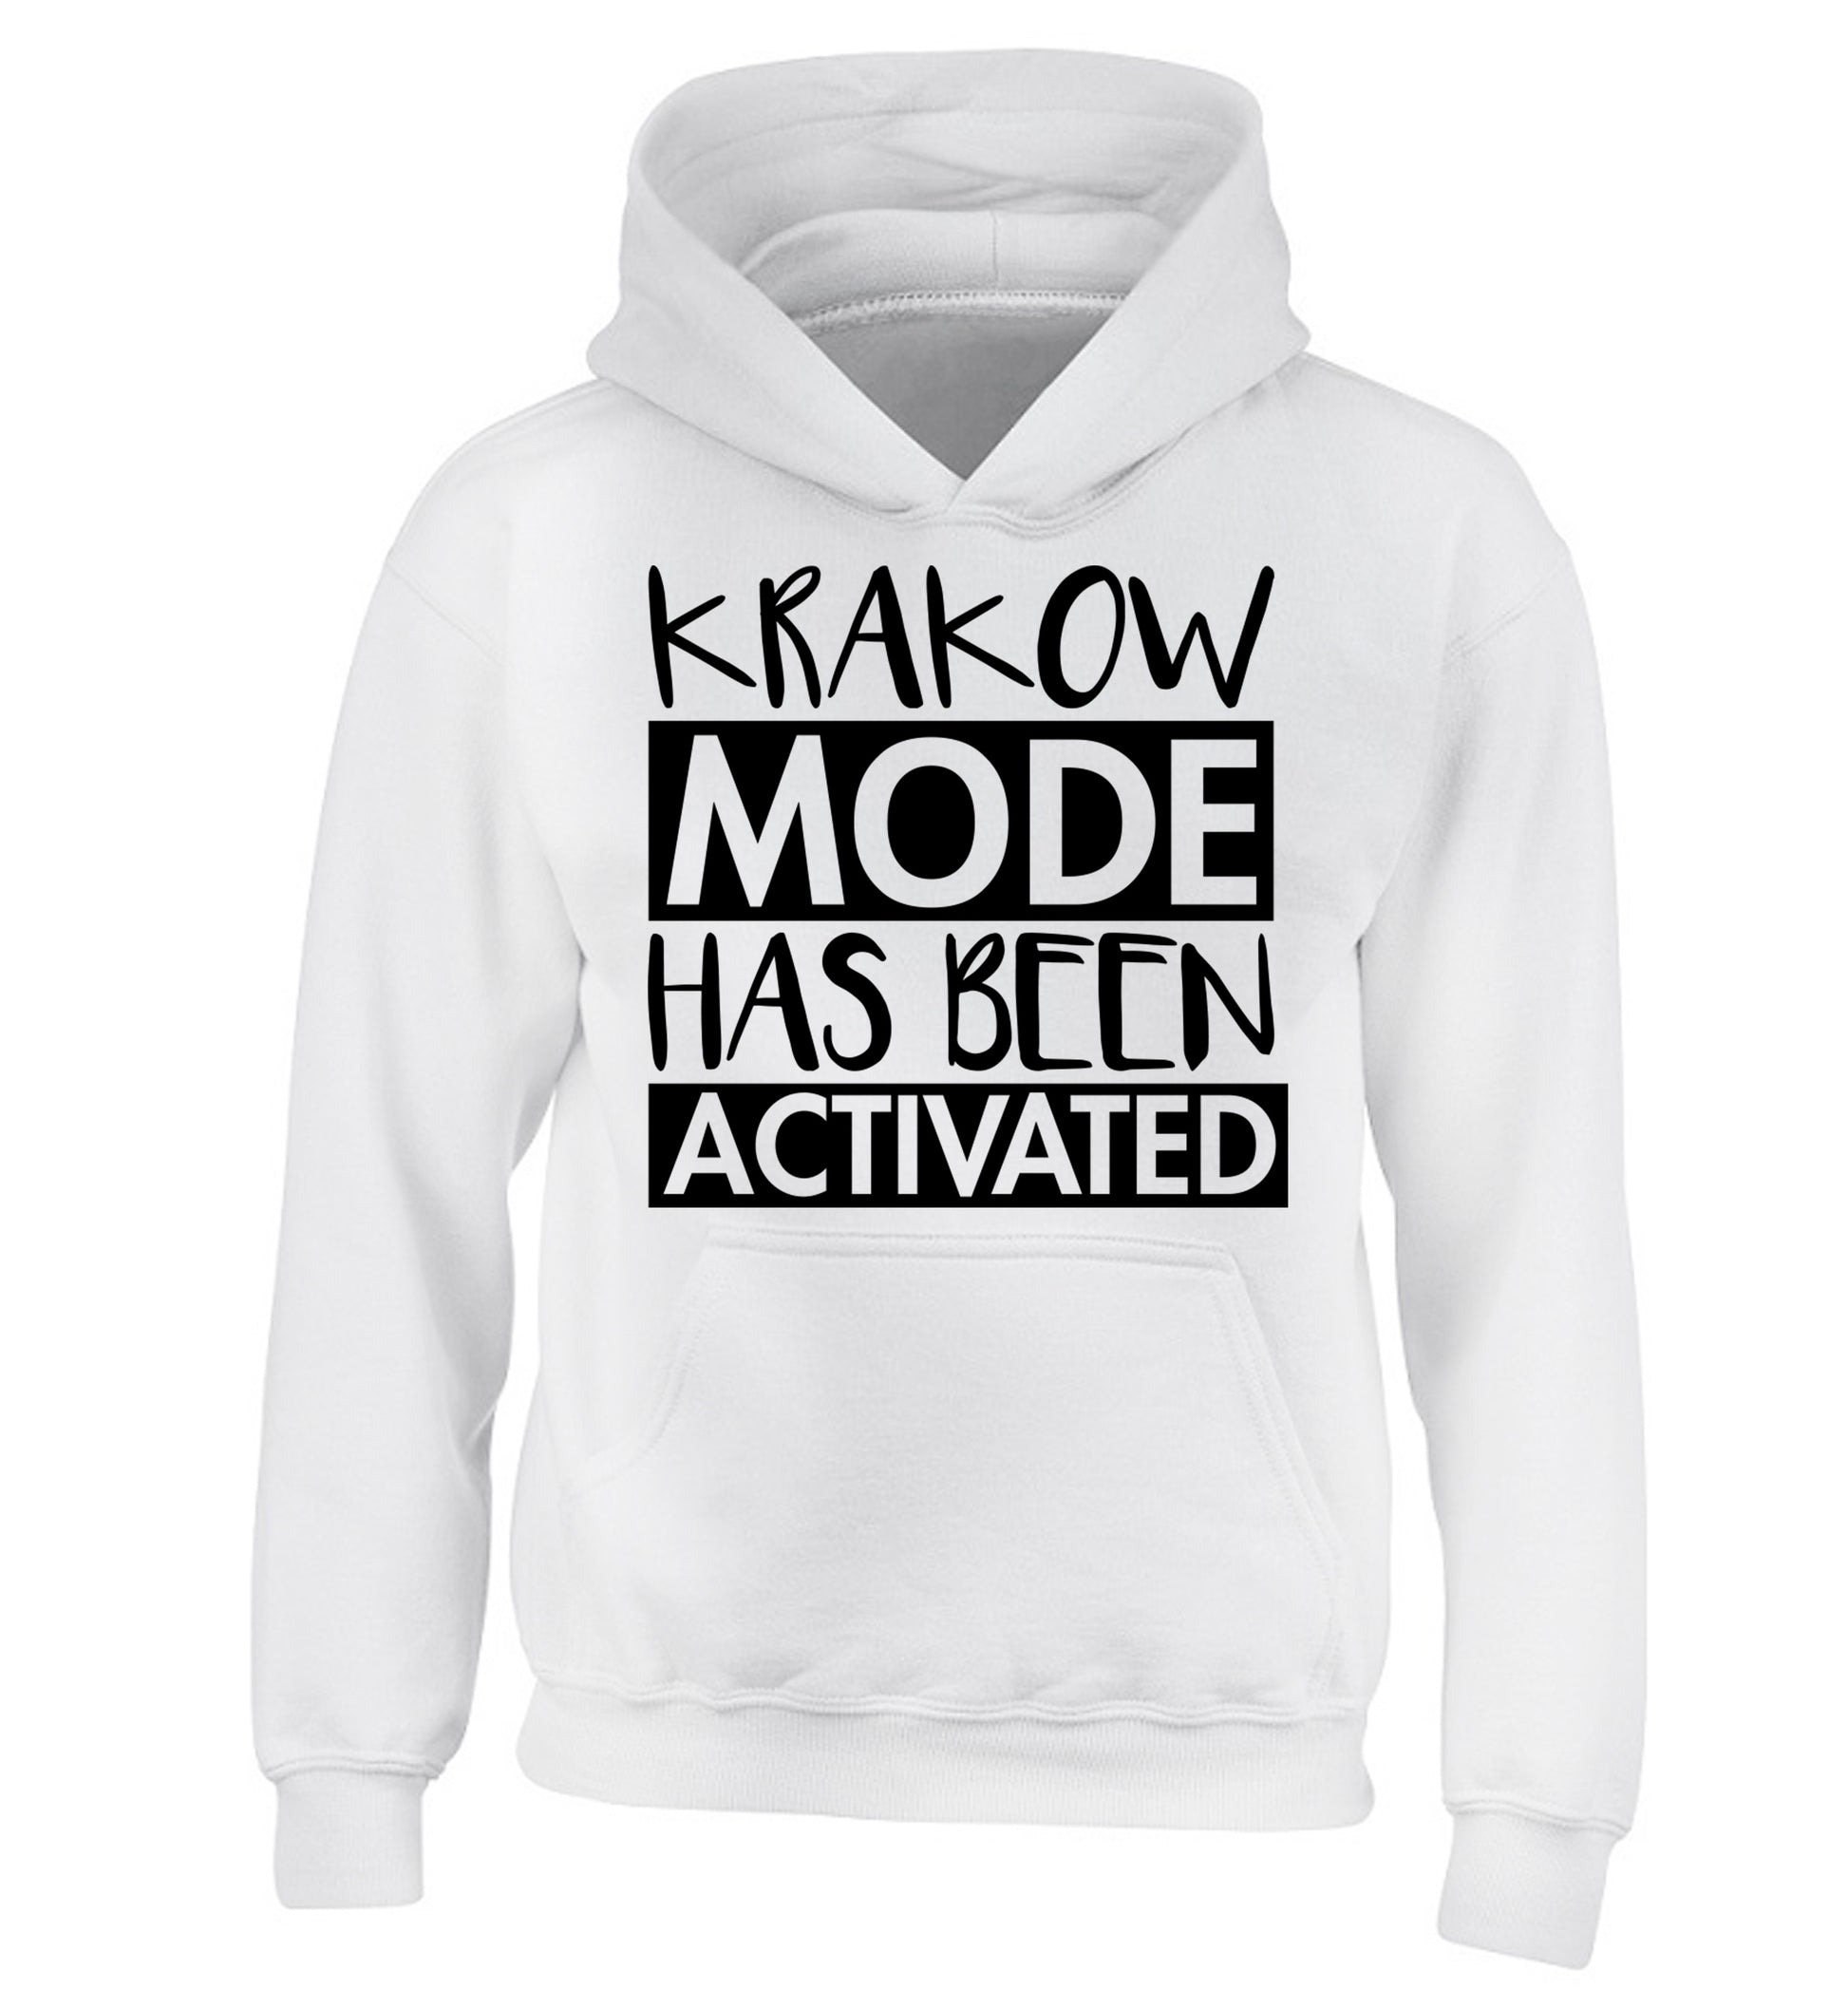 Krakow mode has been activated children's white hoodie 12-13 Years